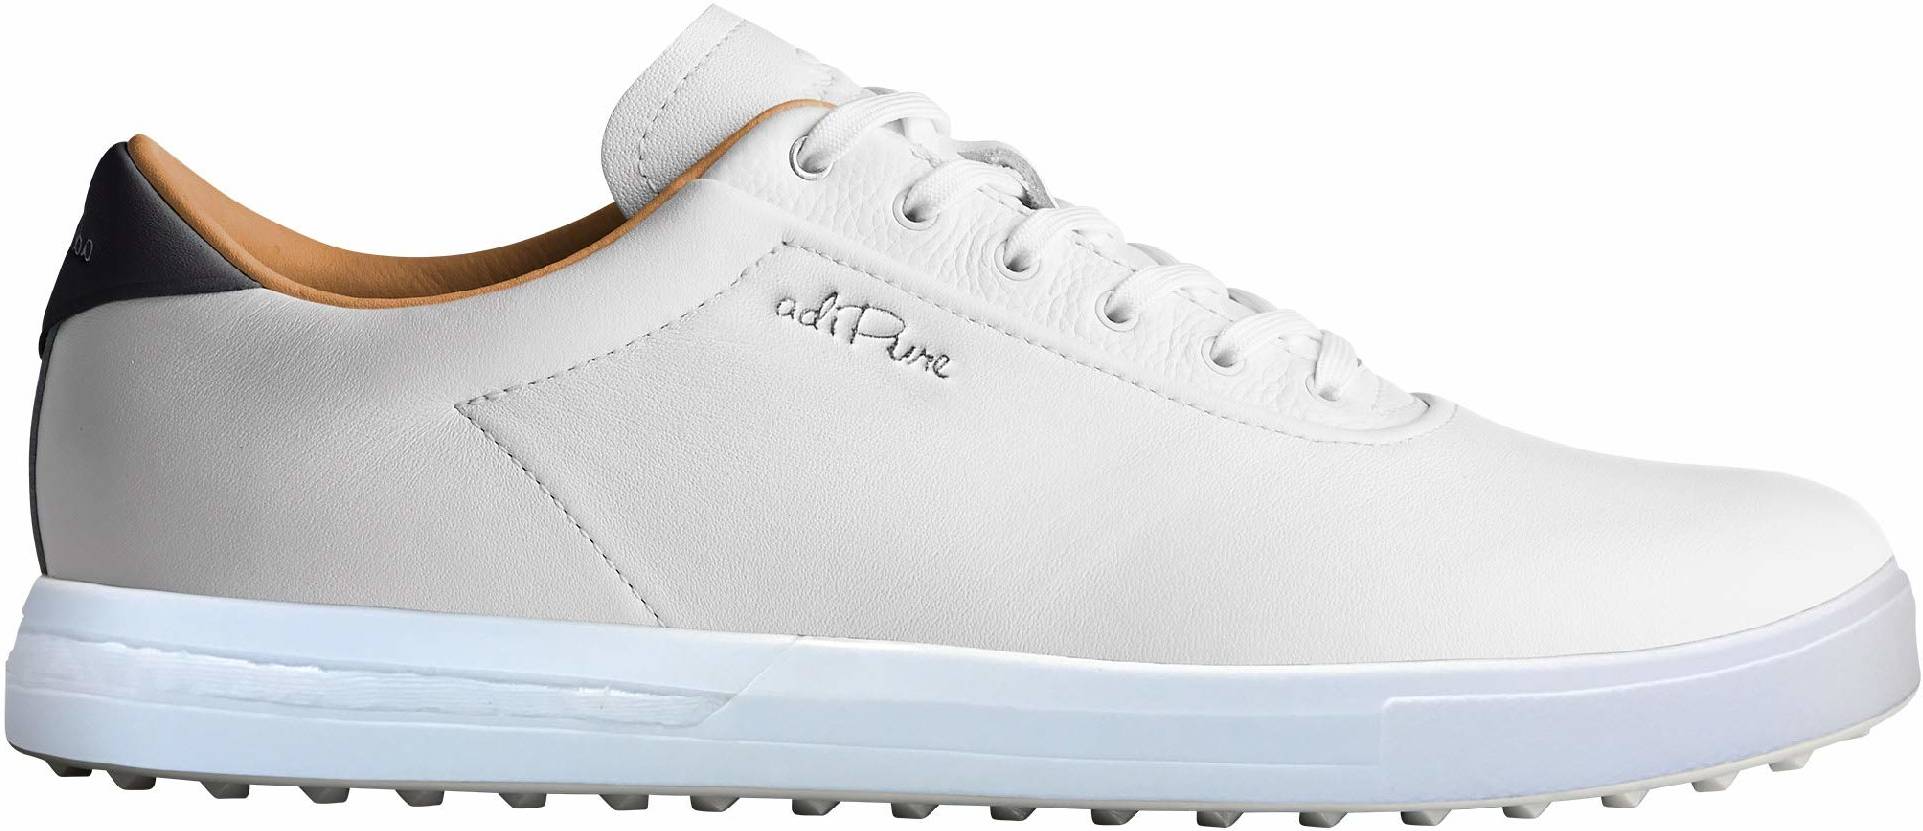 adipure golf shoes white